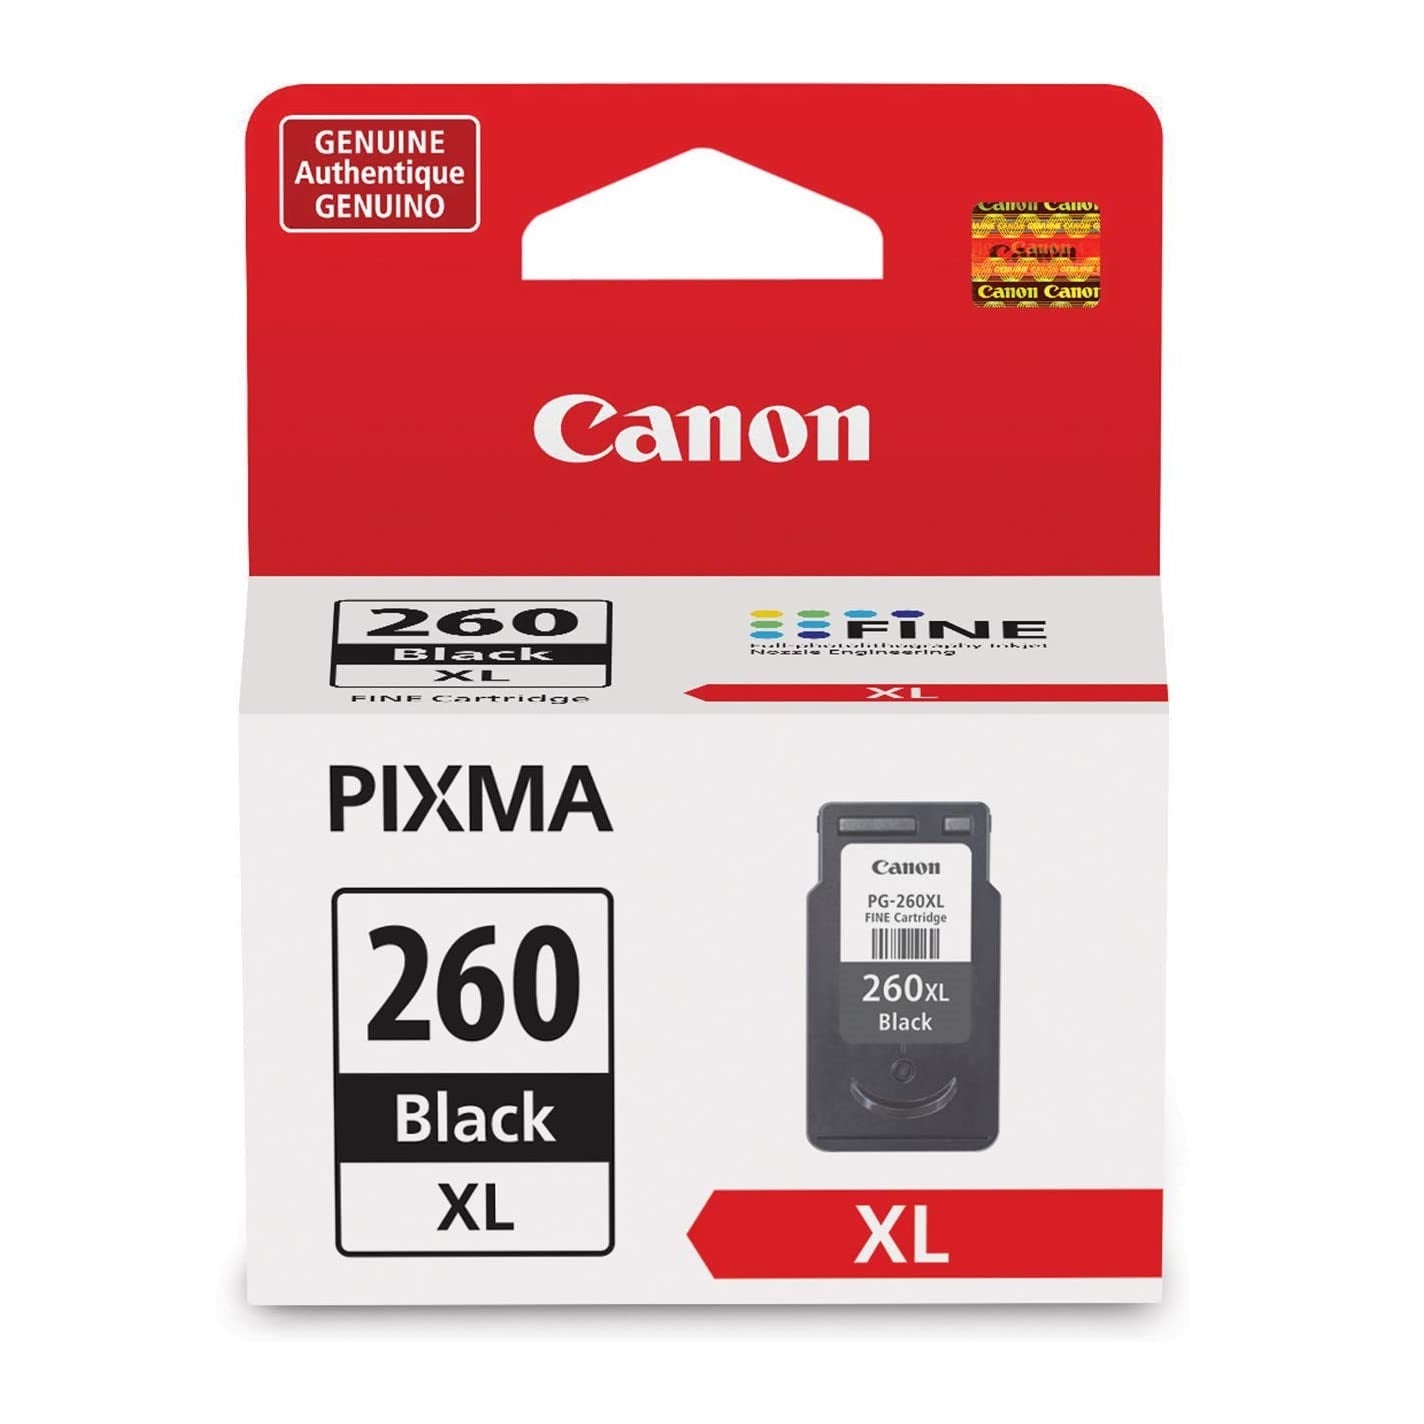 Absolute Toner Canon Genuine OEM PG-260 XL Black Ink Cartridge CN3706C001 Original Canon Cartridges